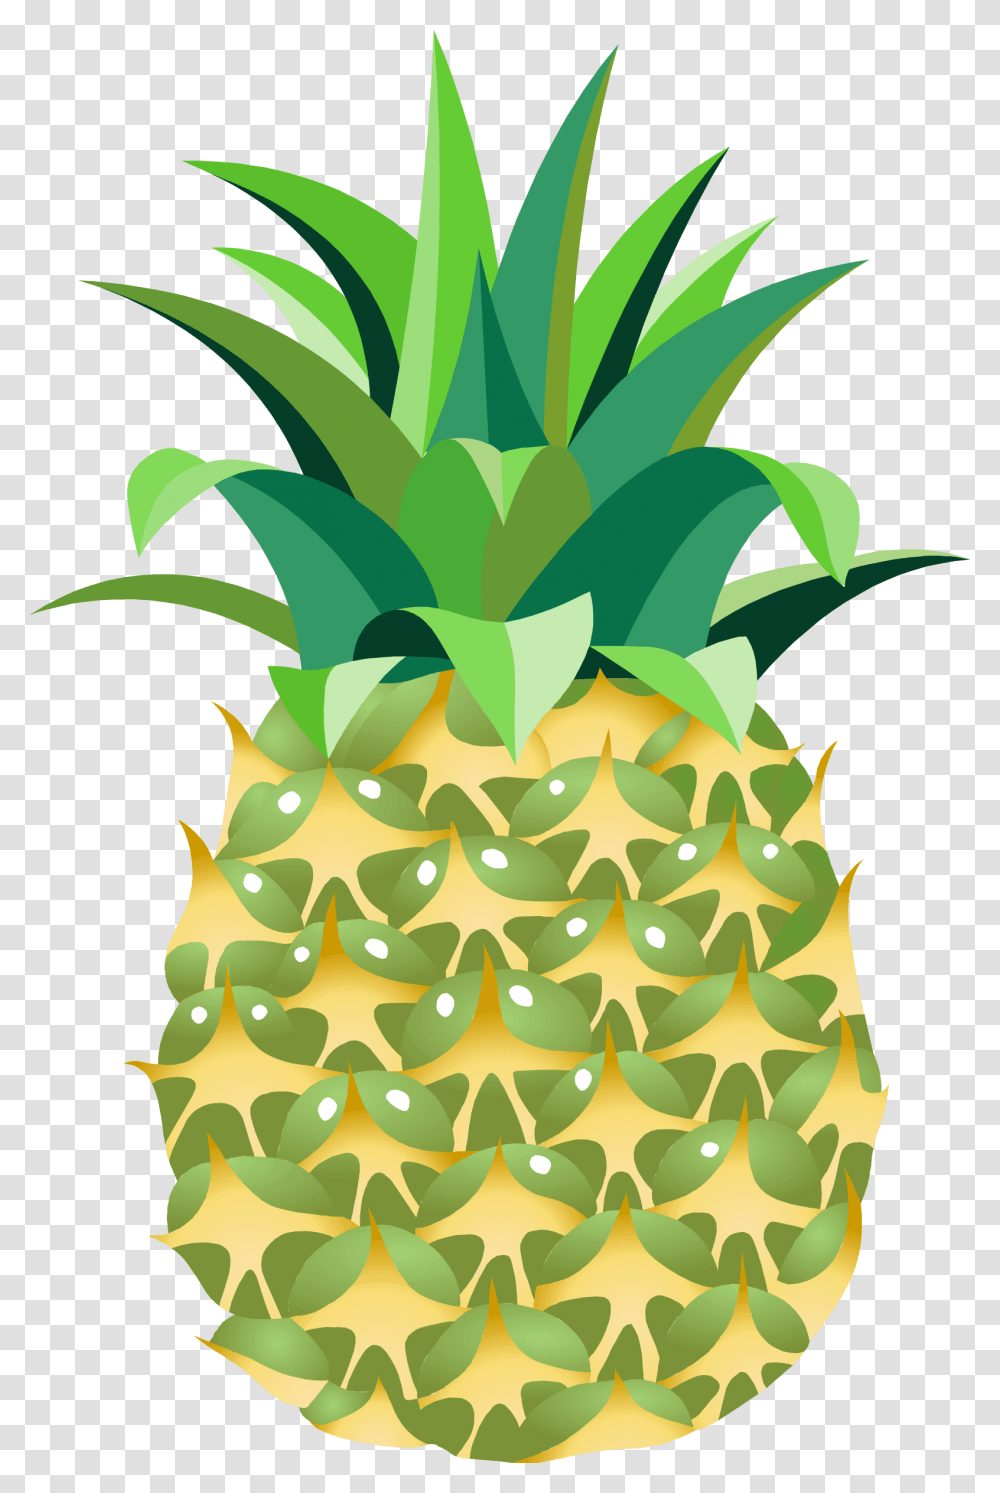 Pineapple Image Free Download Pineapple, Plant, Fruit, Food, Rug Transparent Png